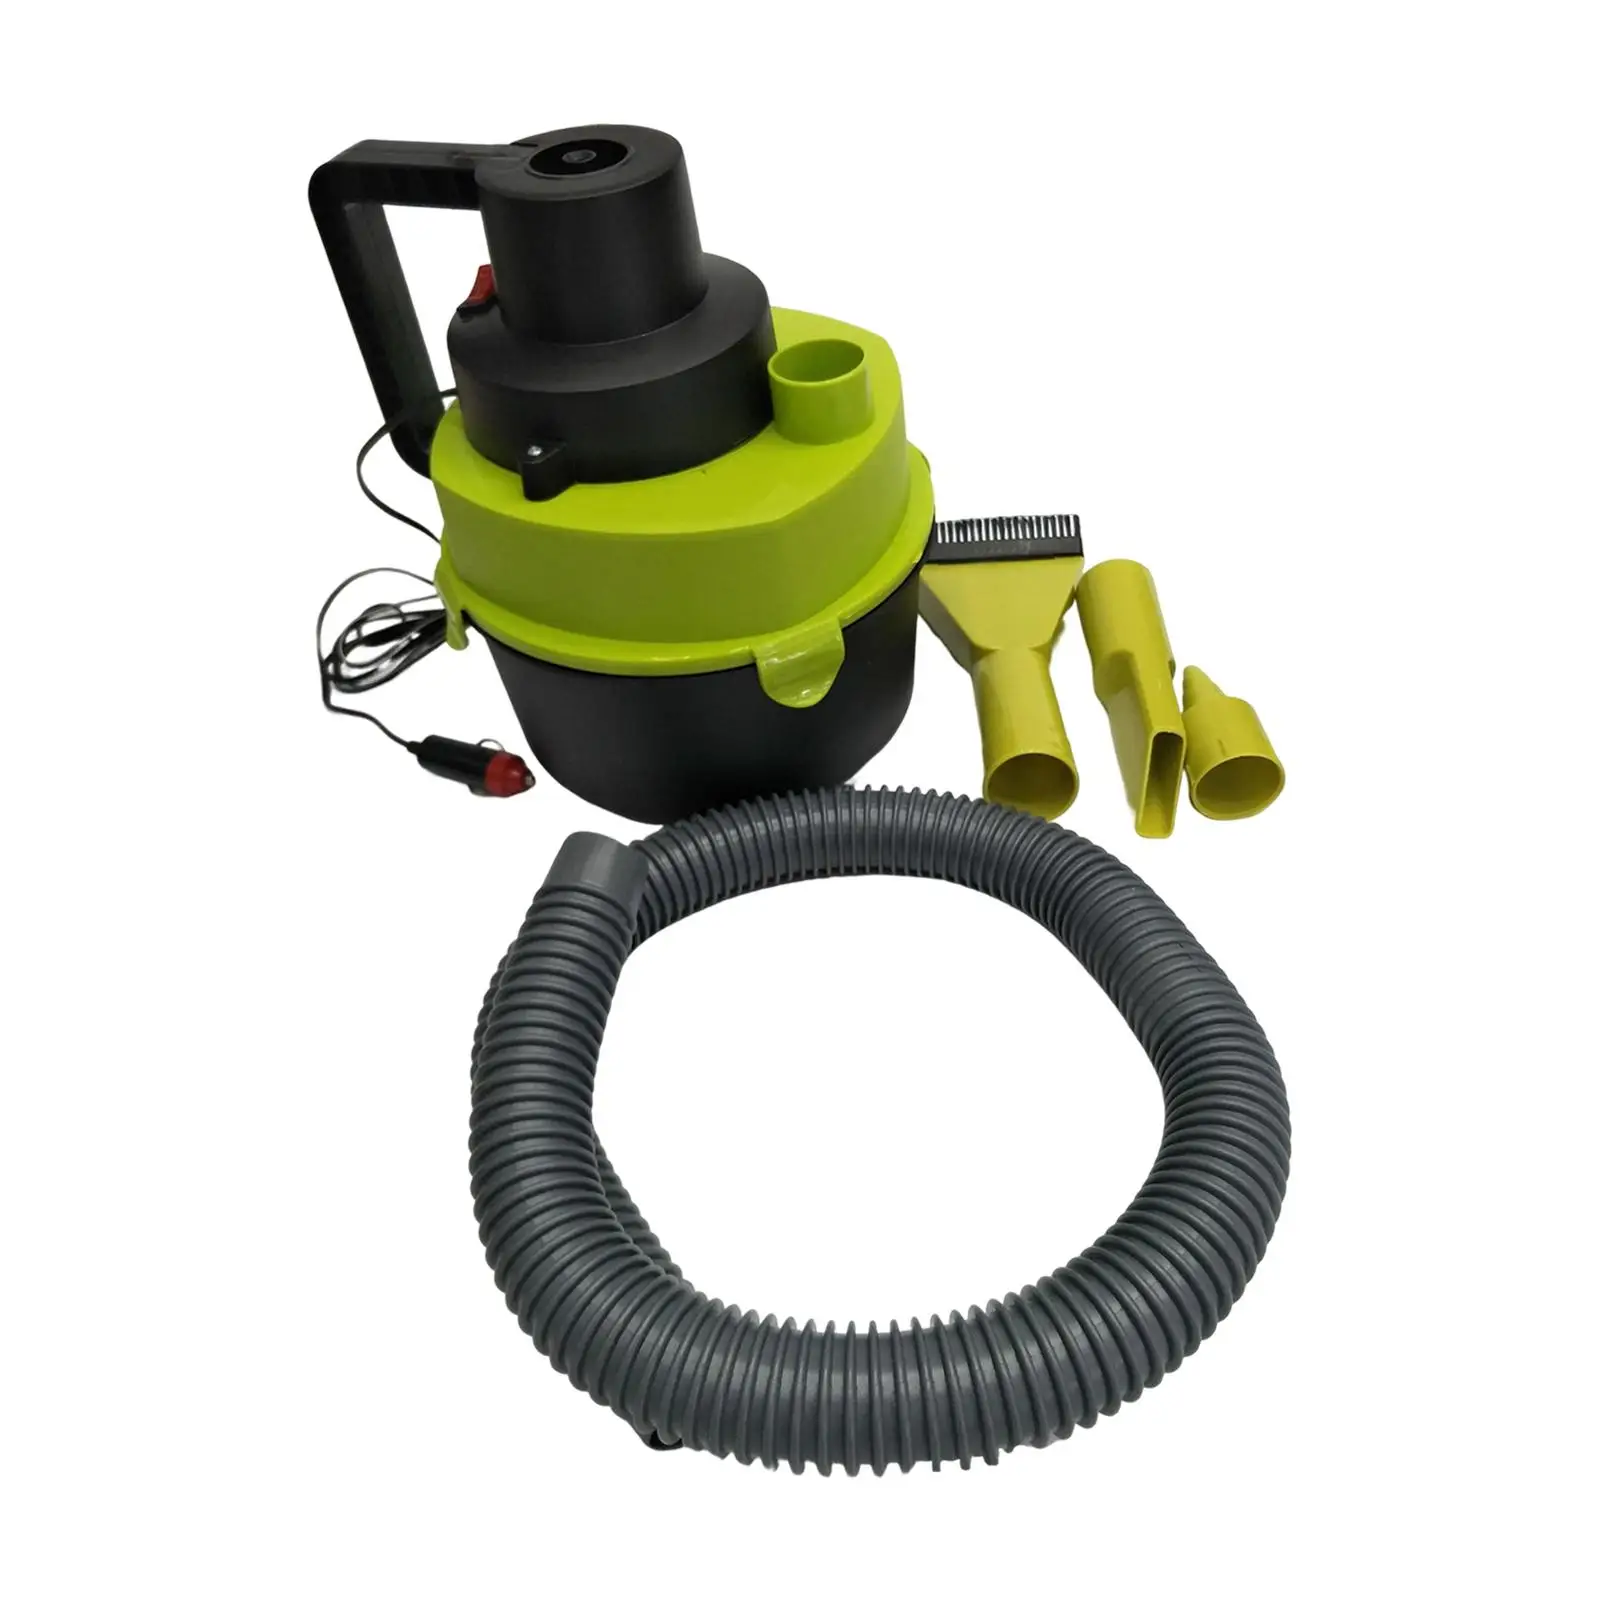 Shop Vacuum Cleaner Handheld dry wet Vacuum for Basement Trucks Window Seams